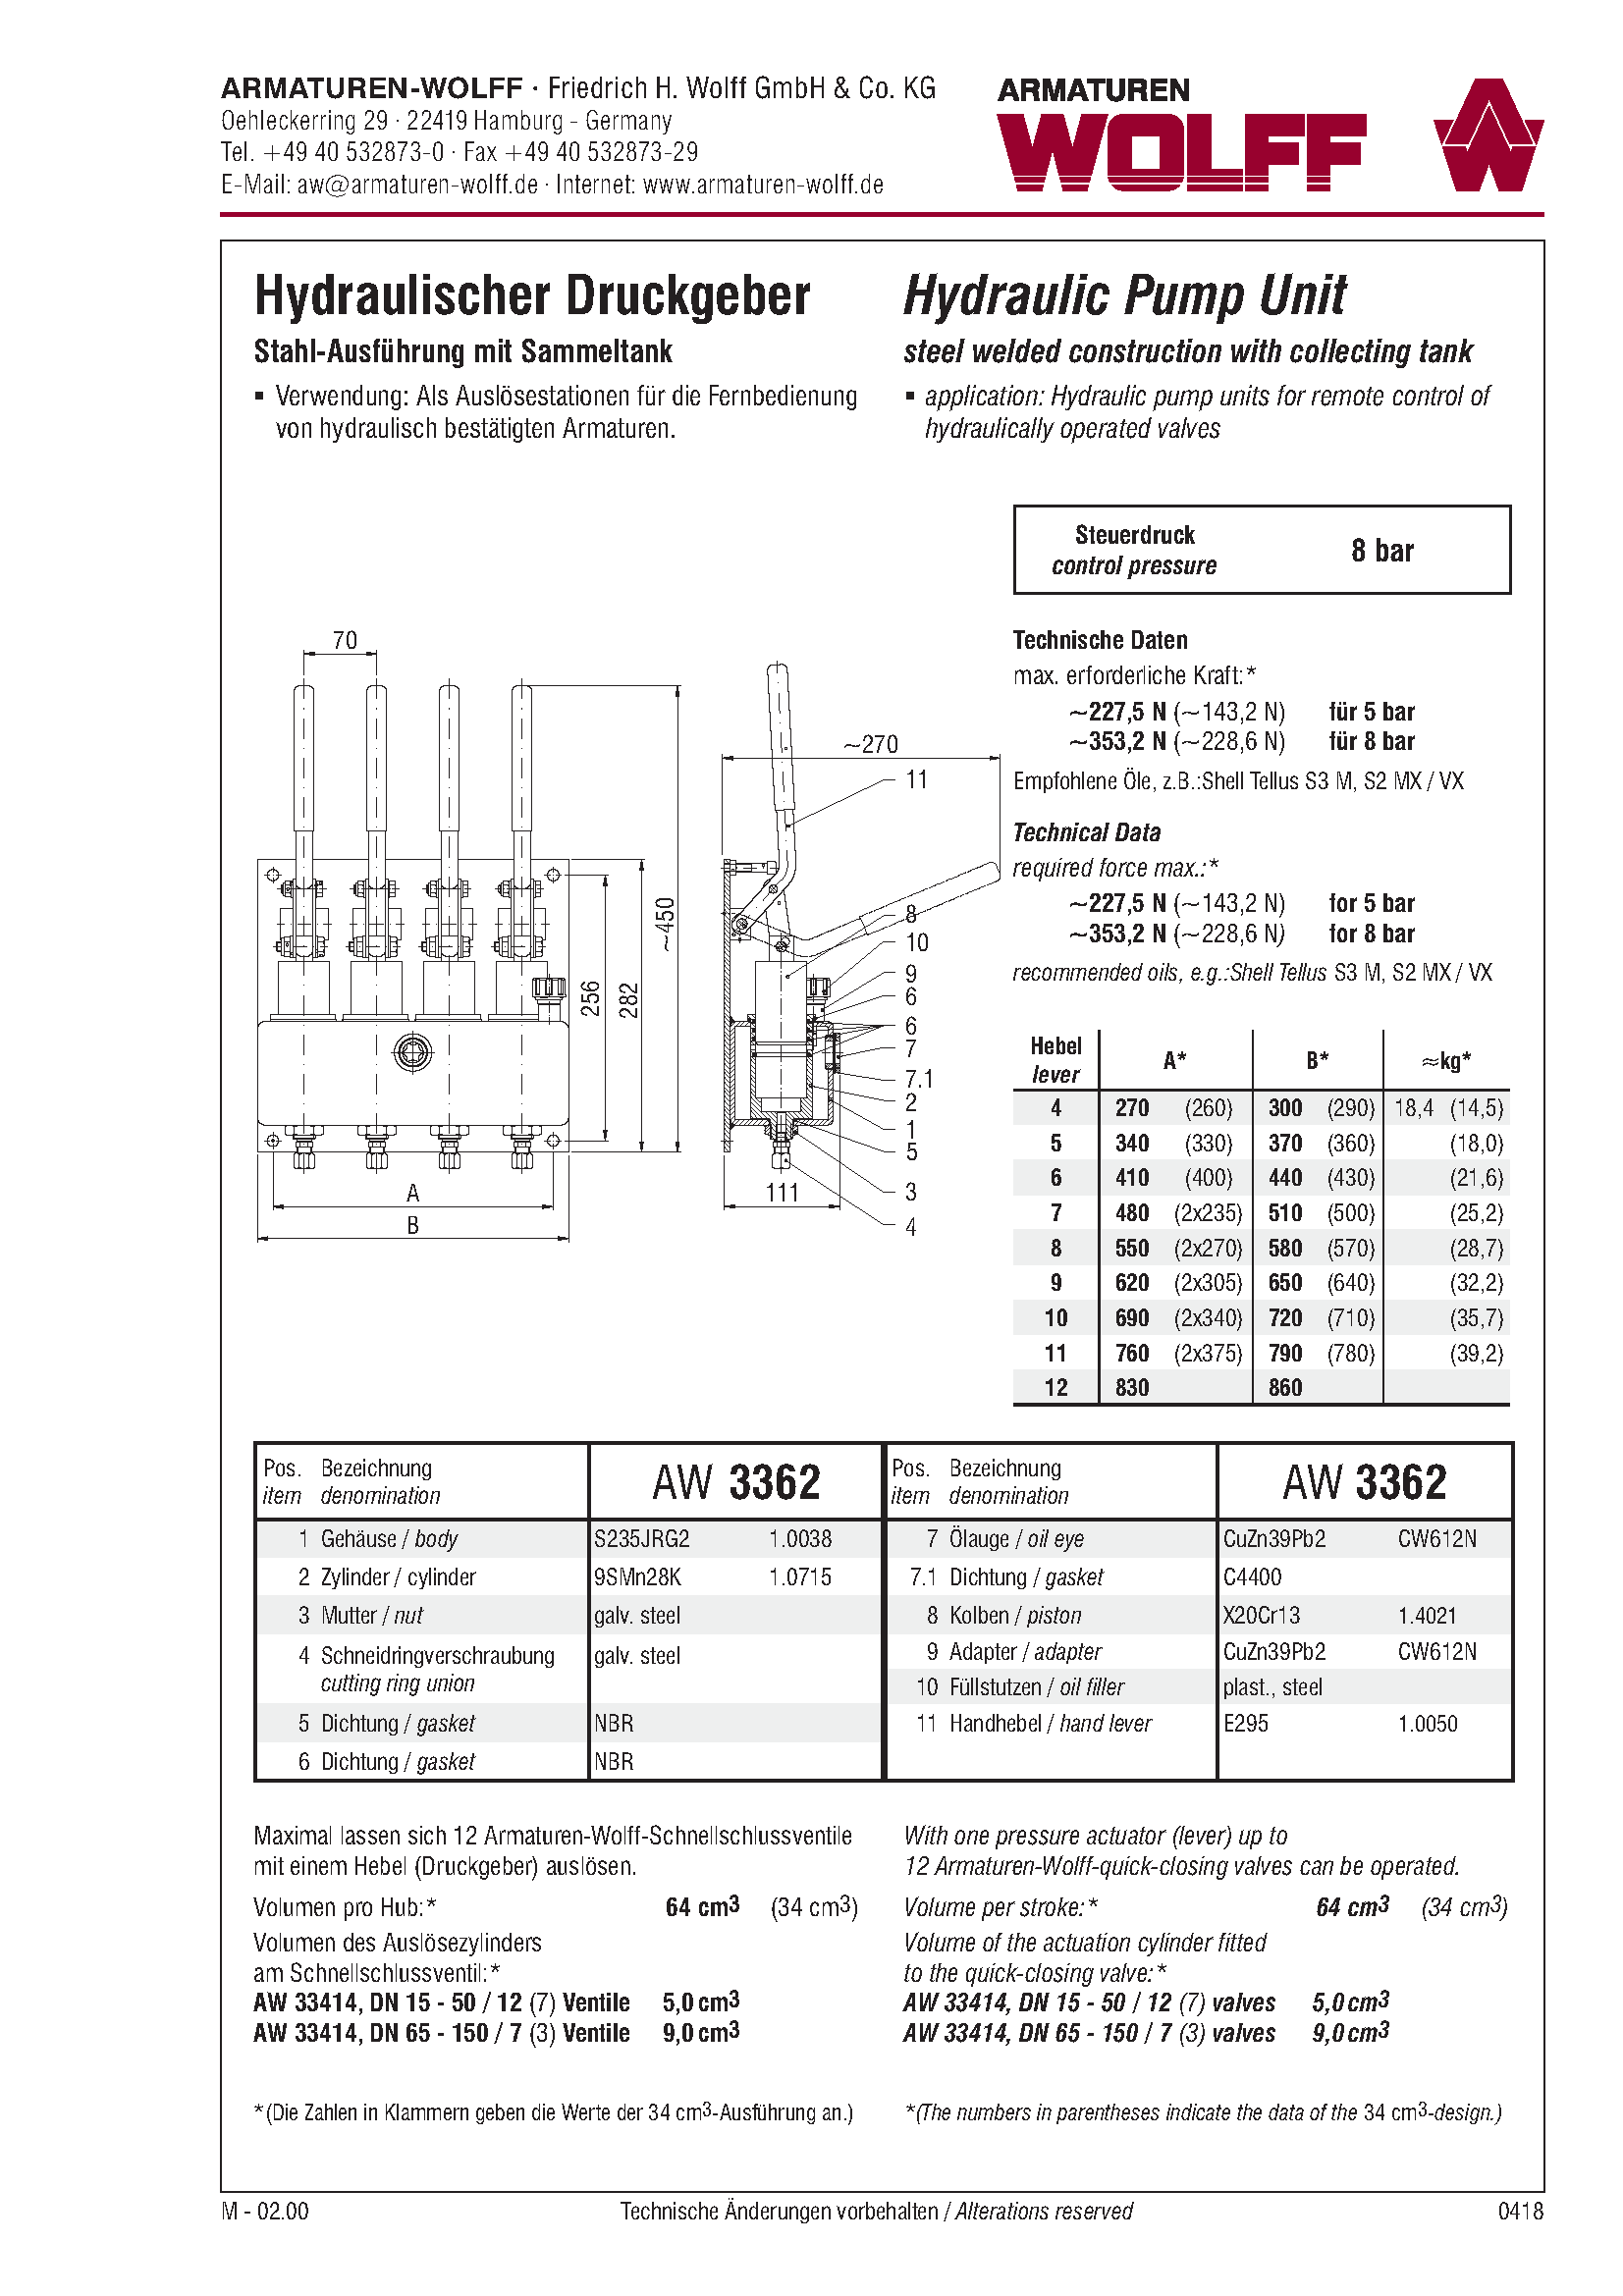 AW 3362 Hydraulic Pump Unit, 4 to x lever